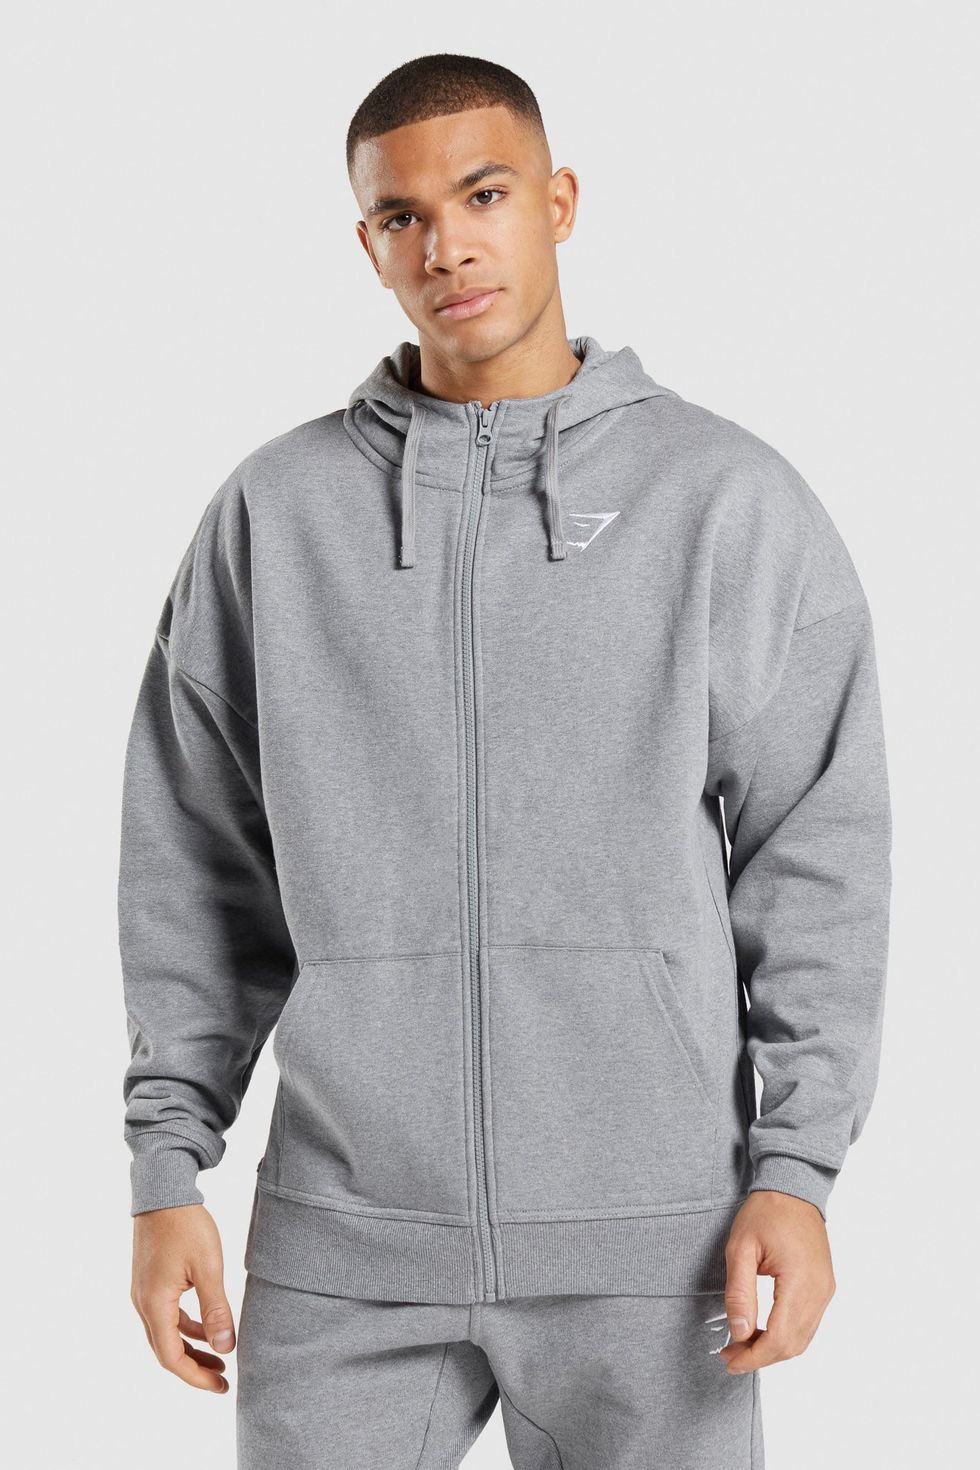 Essentials Mens S Black Lightweight Jersey Pullover Hoodie  Sweatshirt